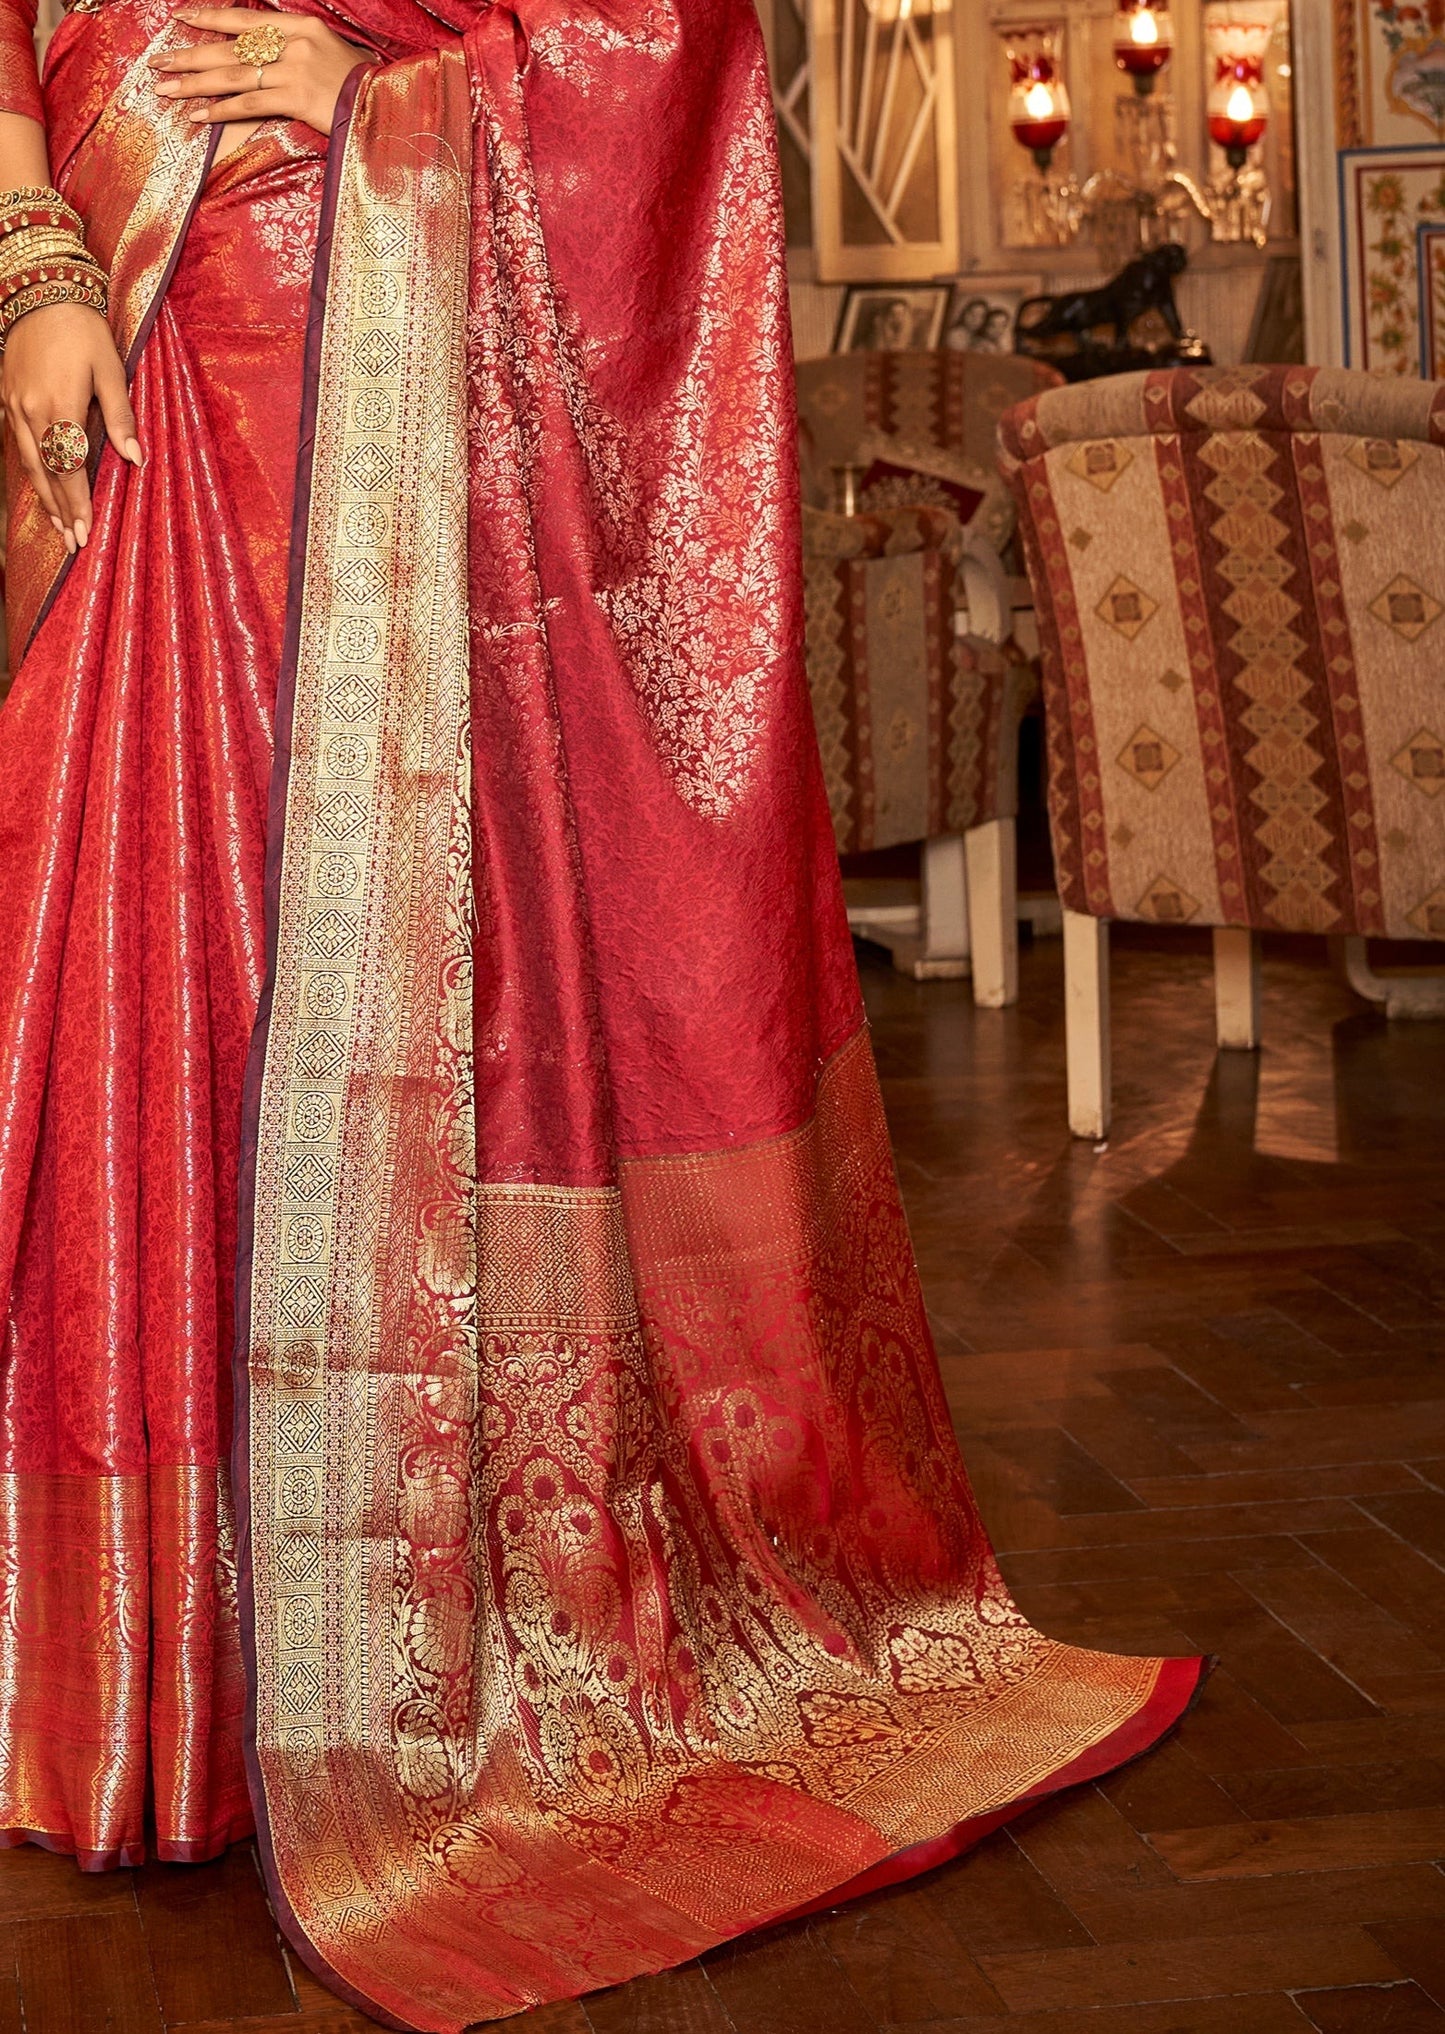 Kanchipuram pattu saree bridal red color online shopping with price.